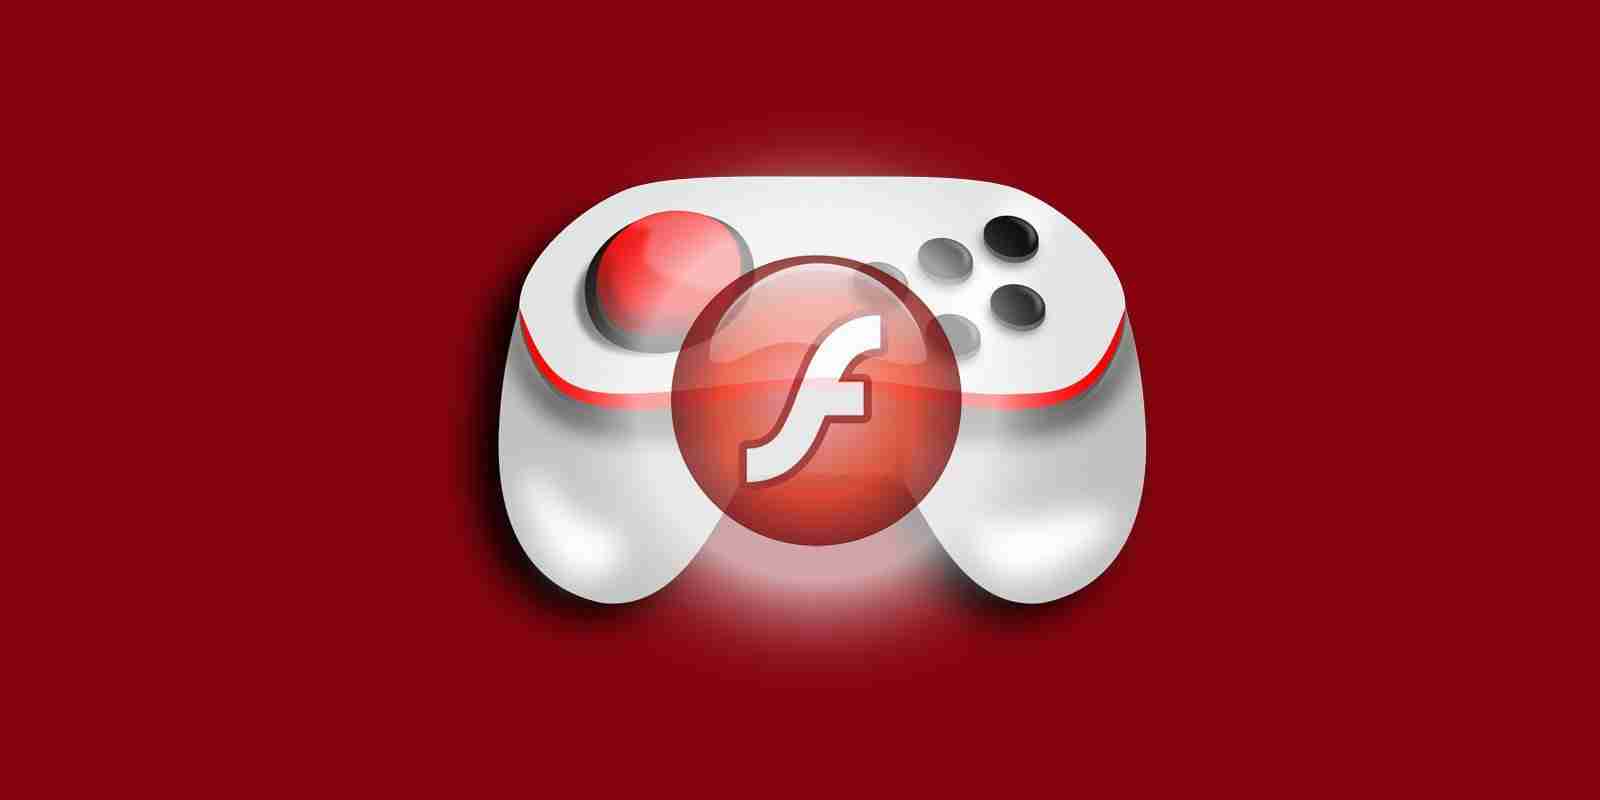 adobe flash player emulator html5